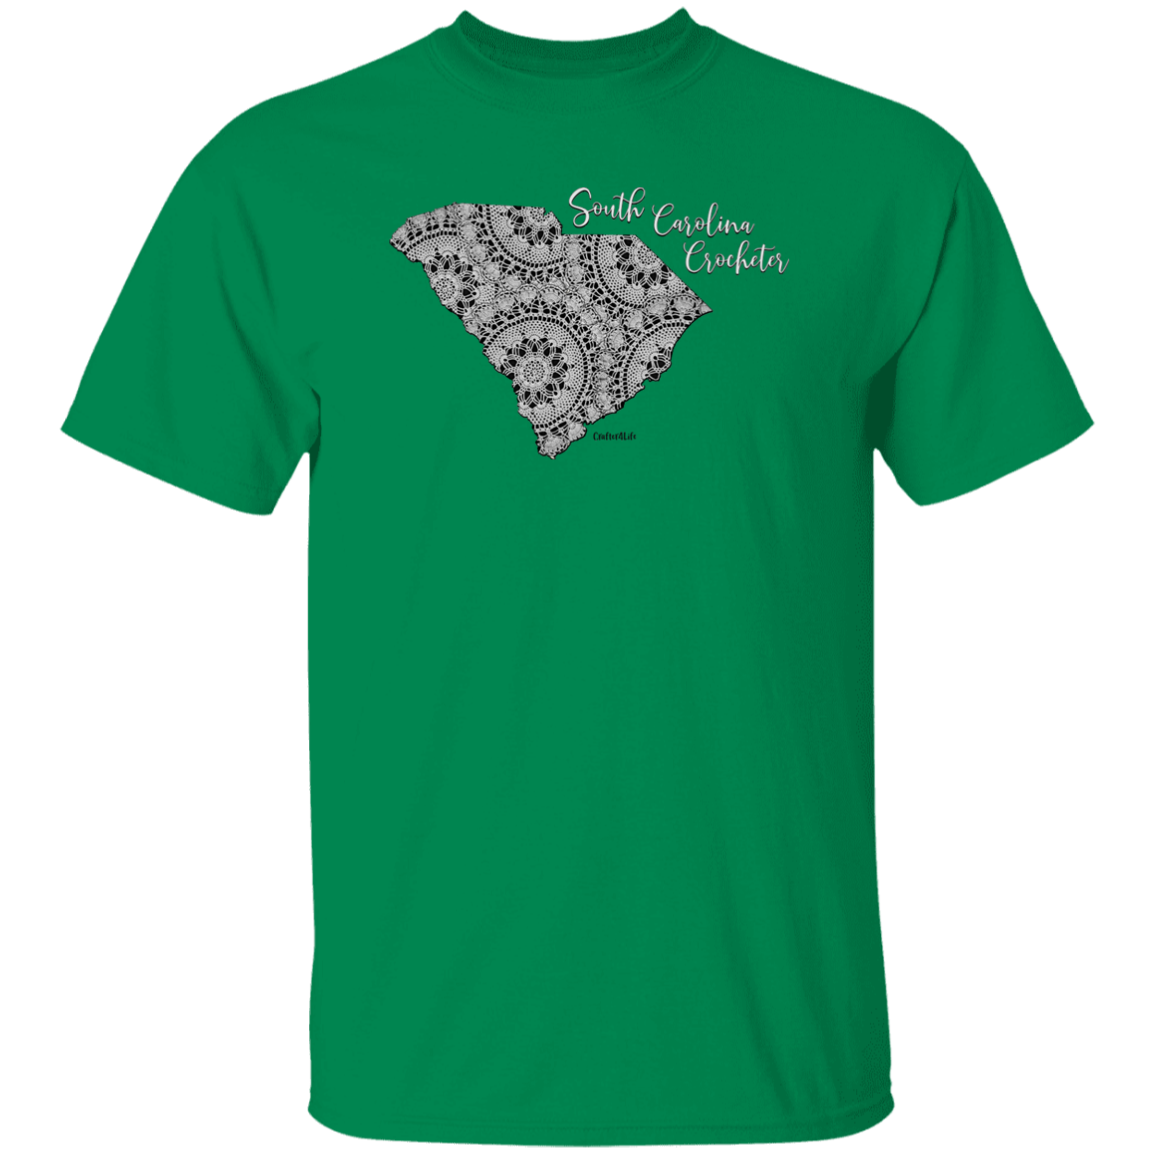 South Carolina Crocheter Cotton T-Shirt